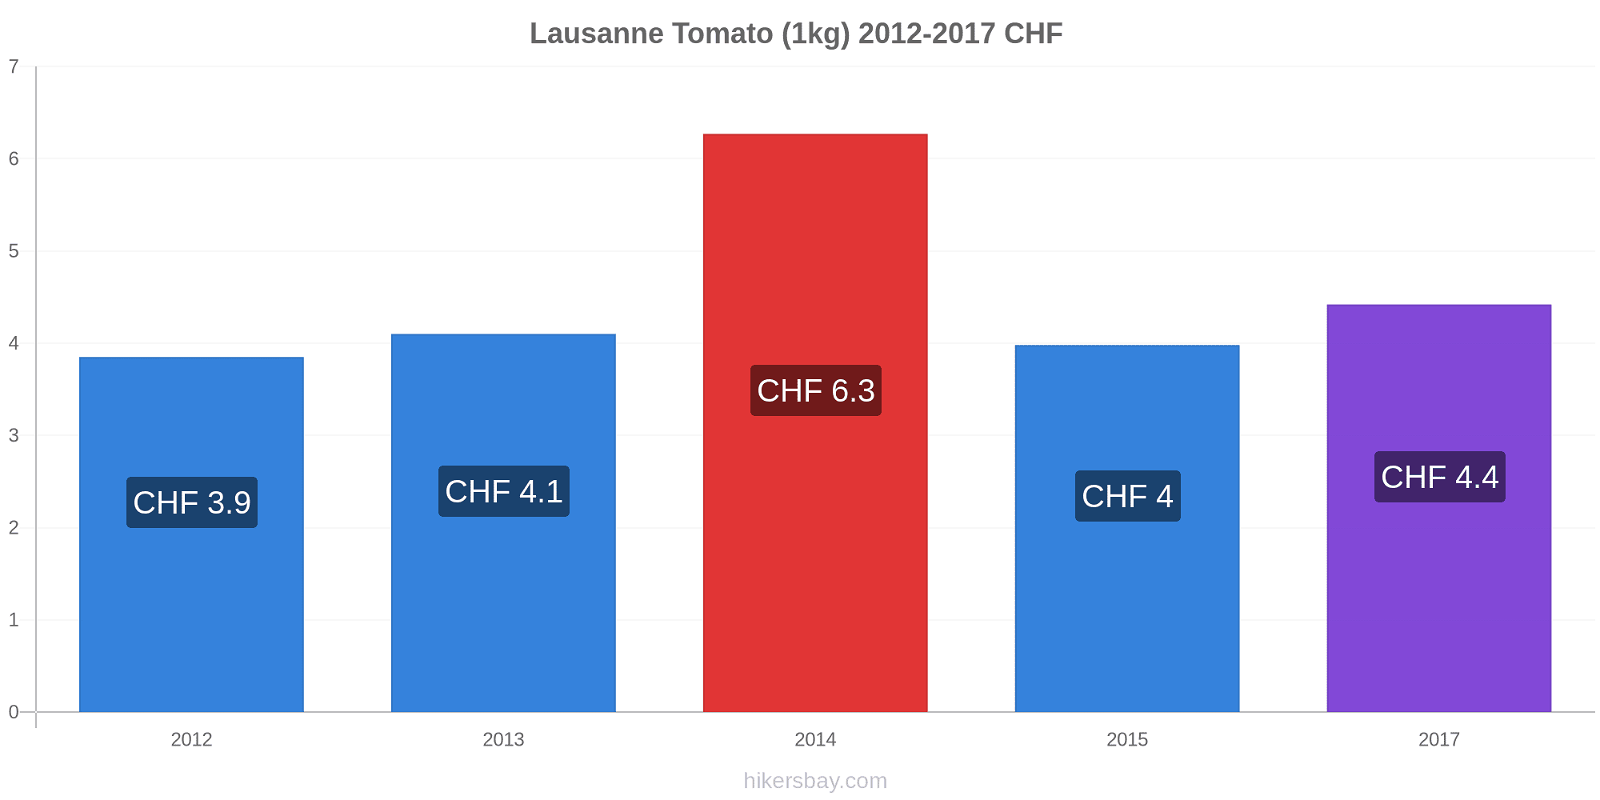 Lausanne price changes Tomato (1kg) hikersbay.com